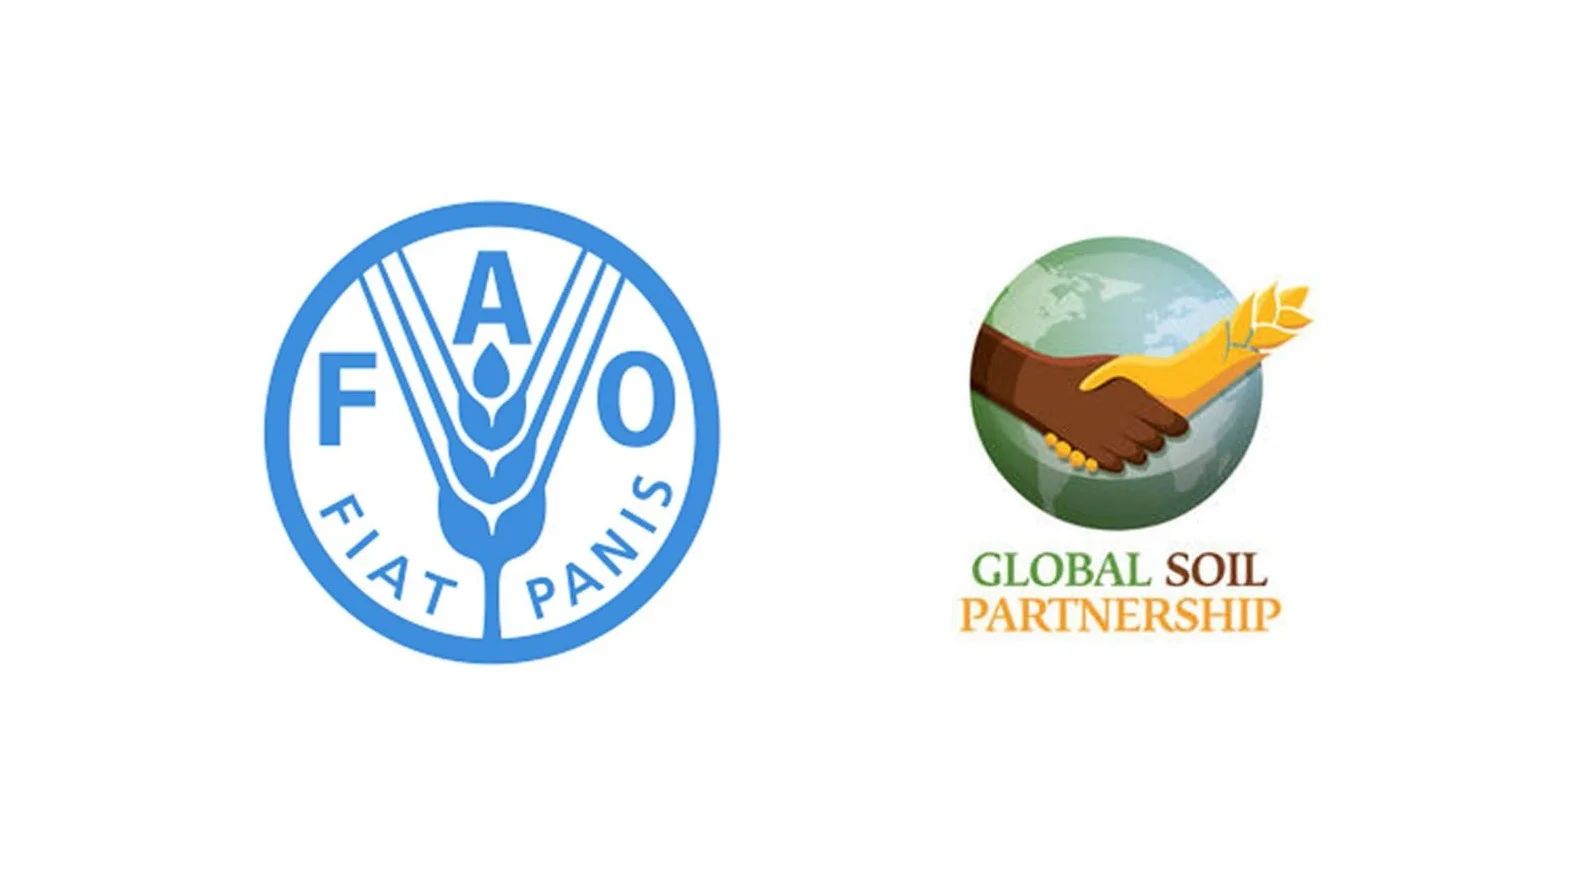 The future of global soil governance